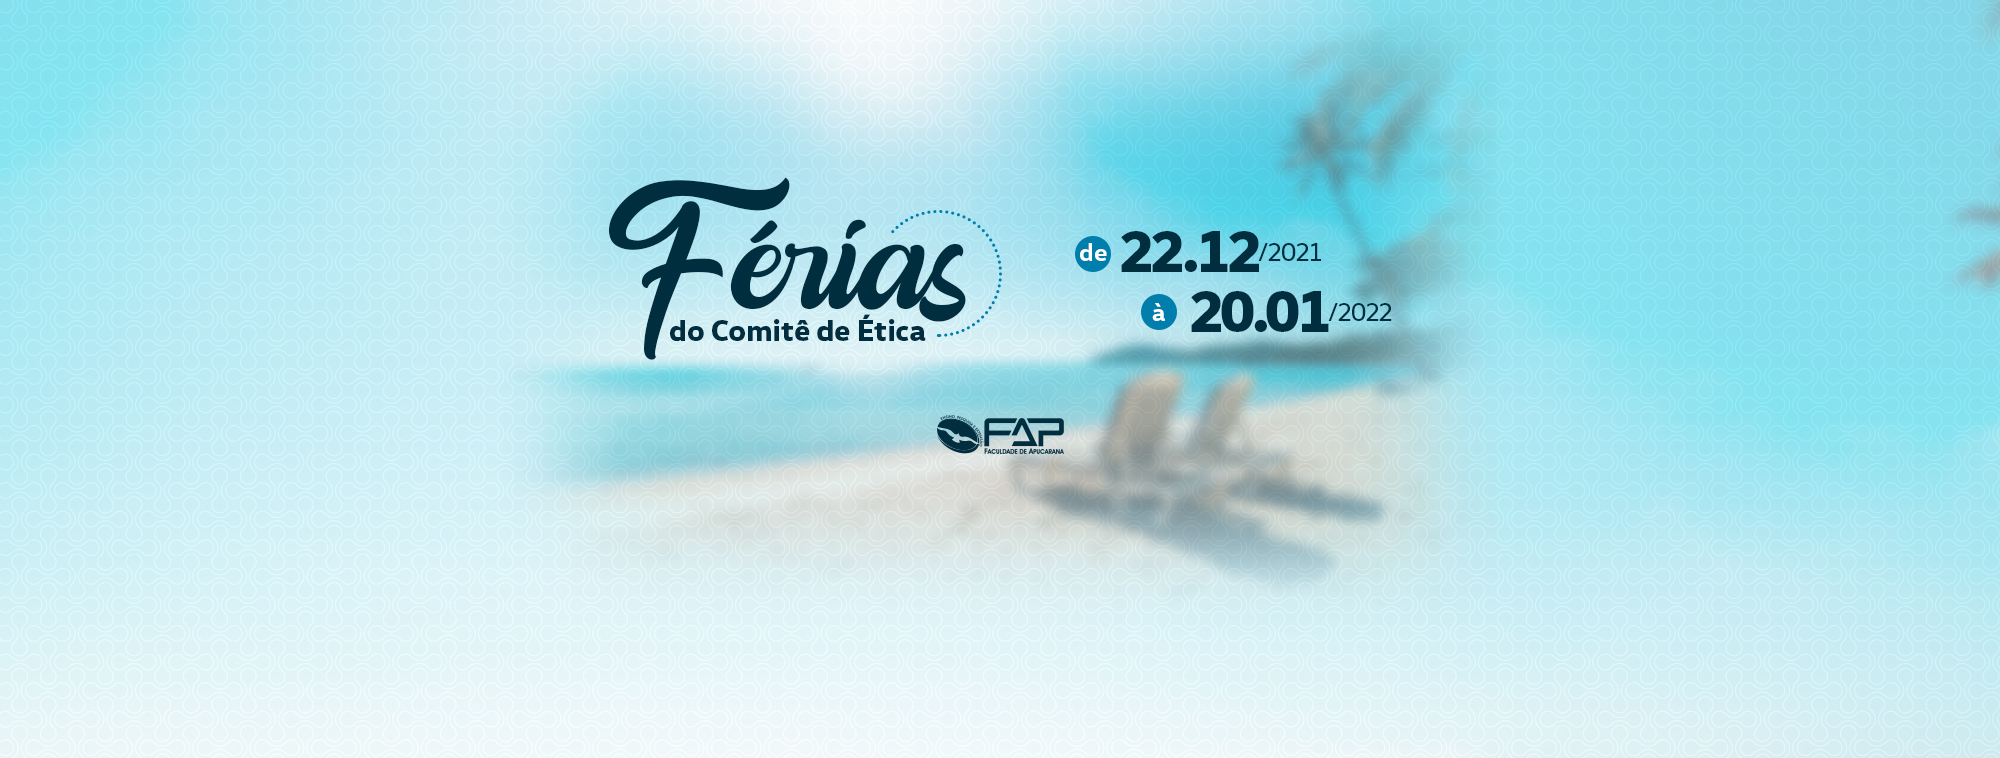 Banner-Site-Aviso-de-Férias-FP-Dez21